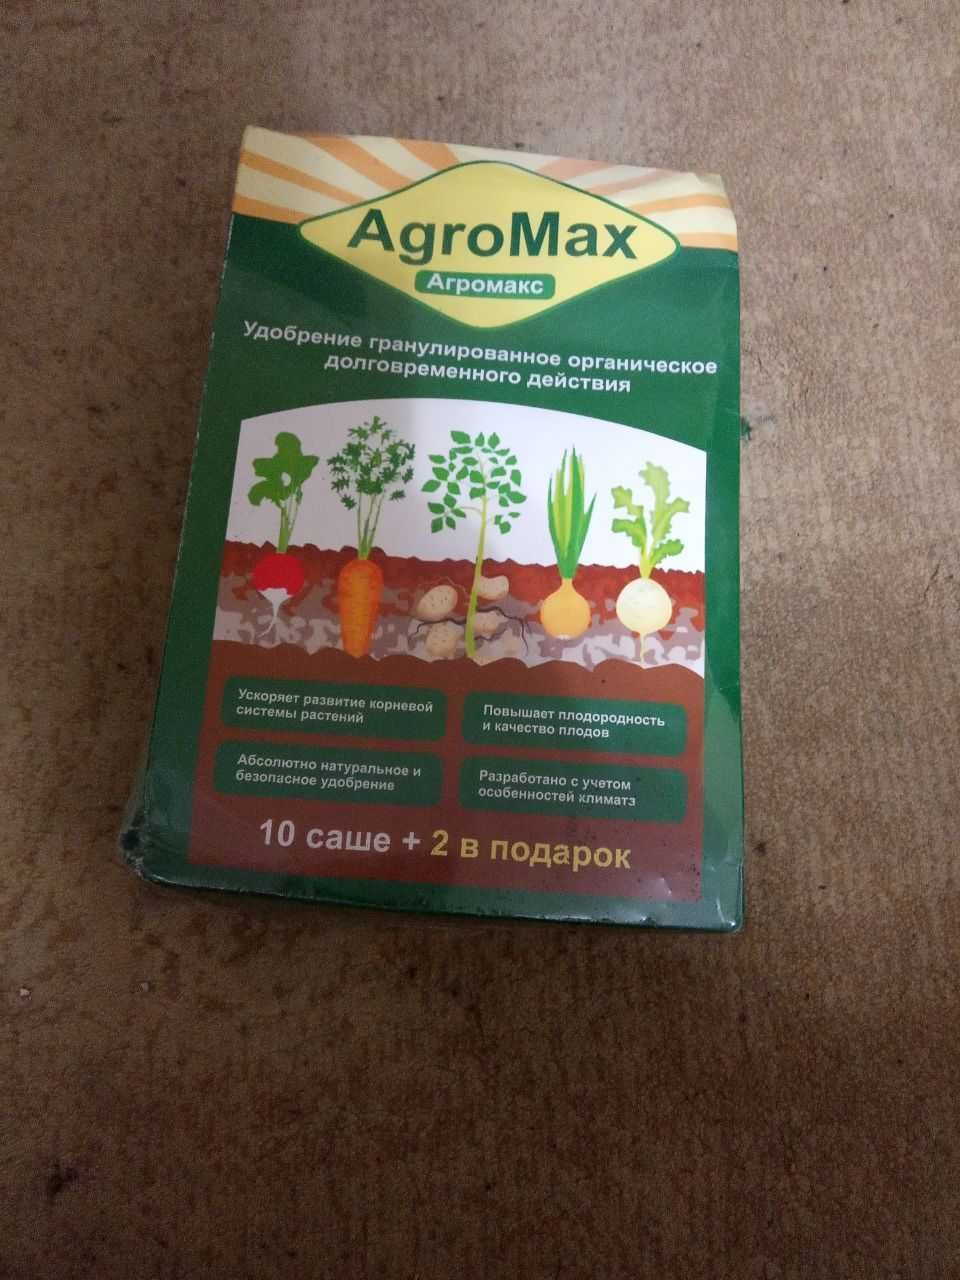 Agromax (агромакс)